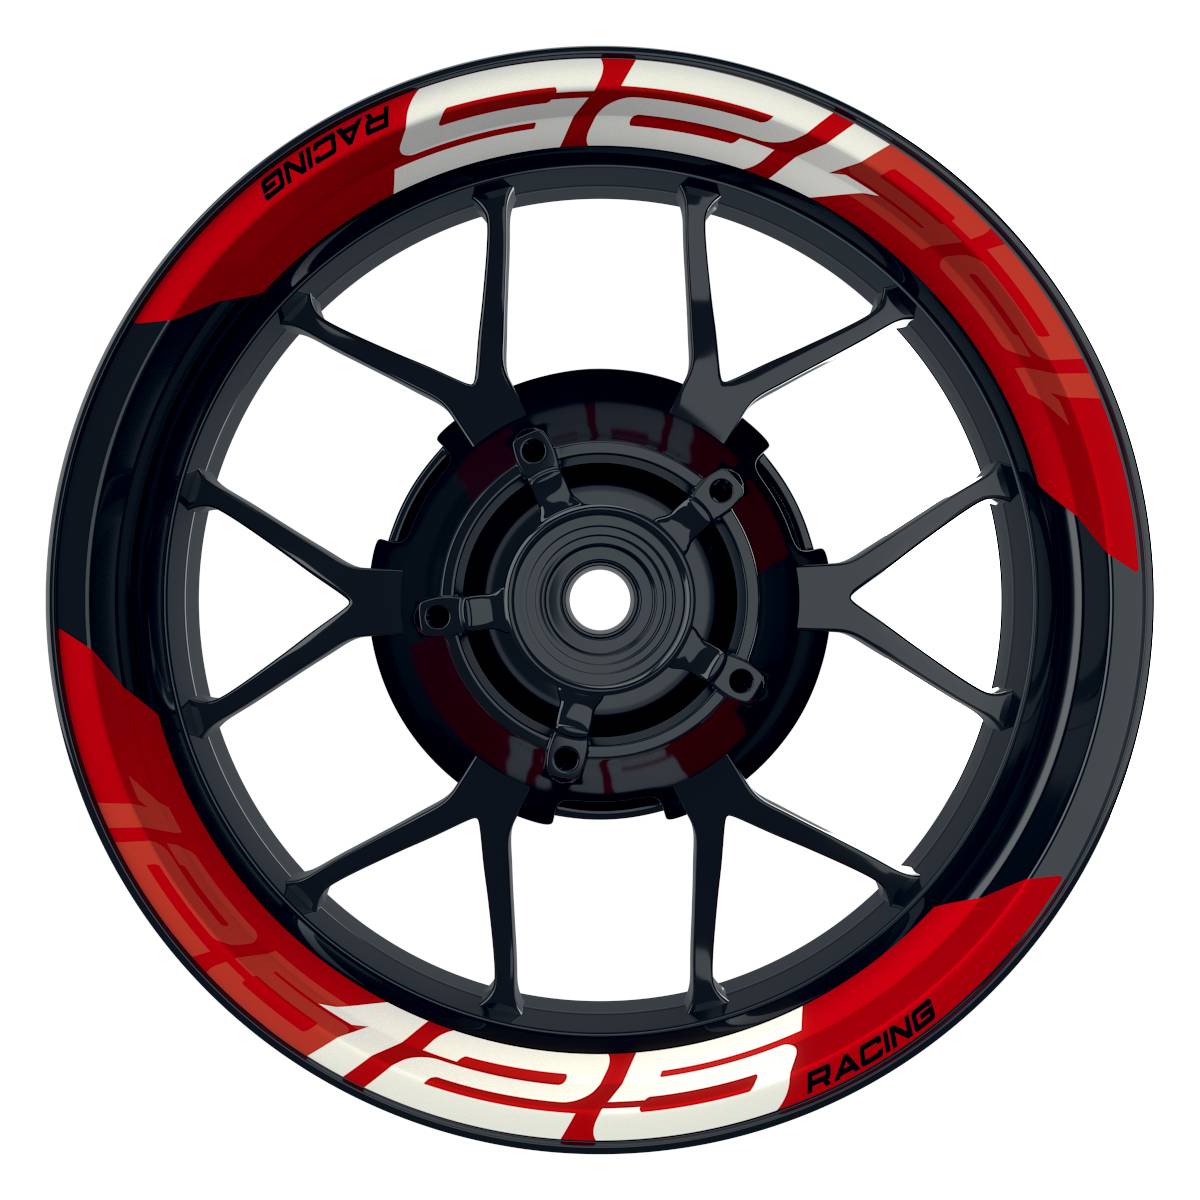 Wheelsticker Felgenaufkleber KTM Racing 125 einfarbig V2 rot Frontansicht